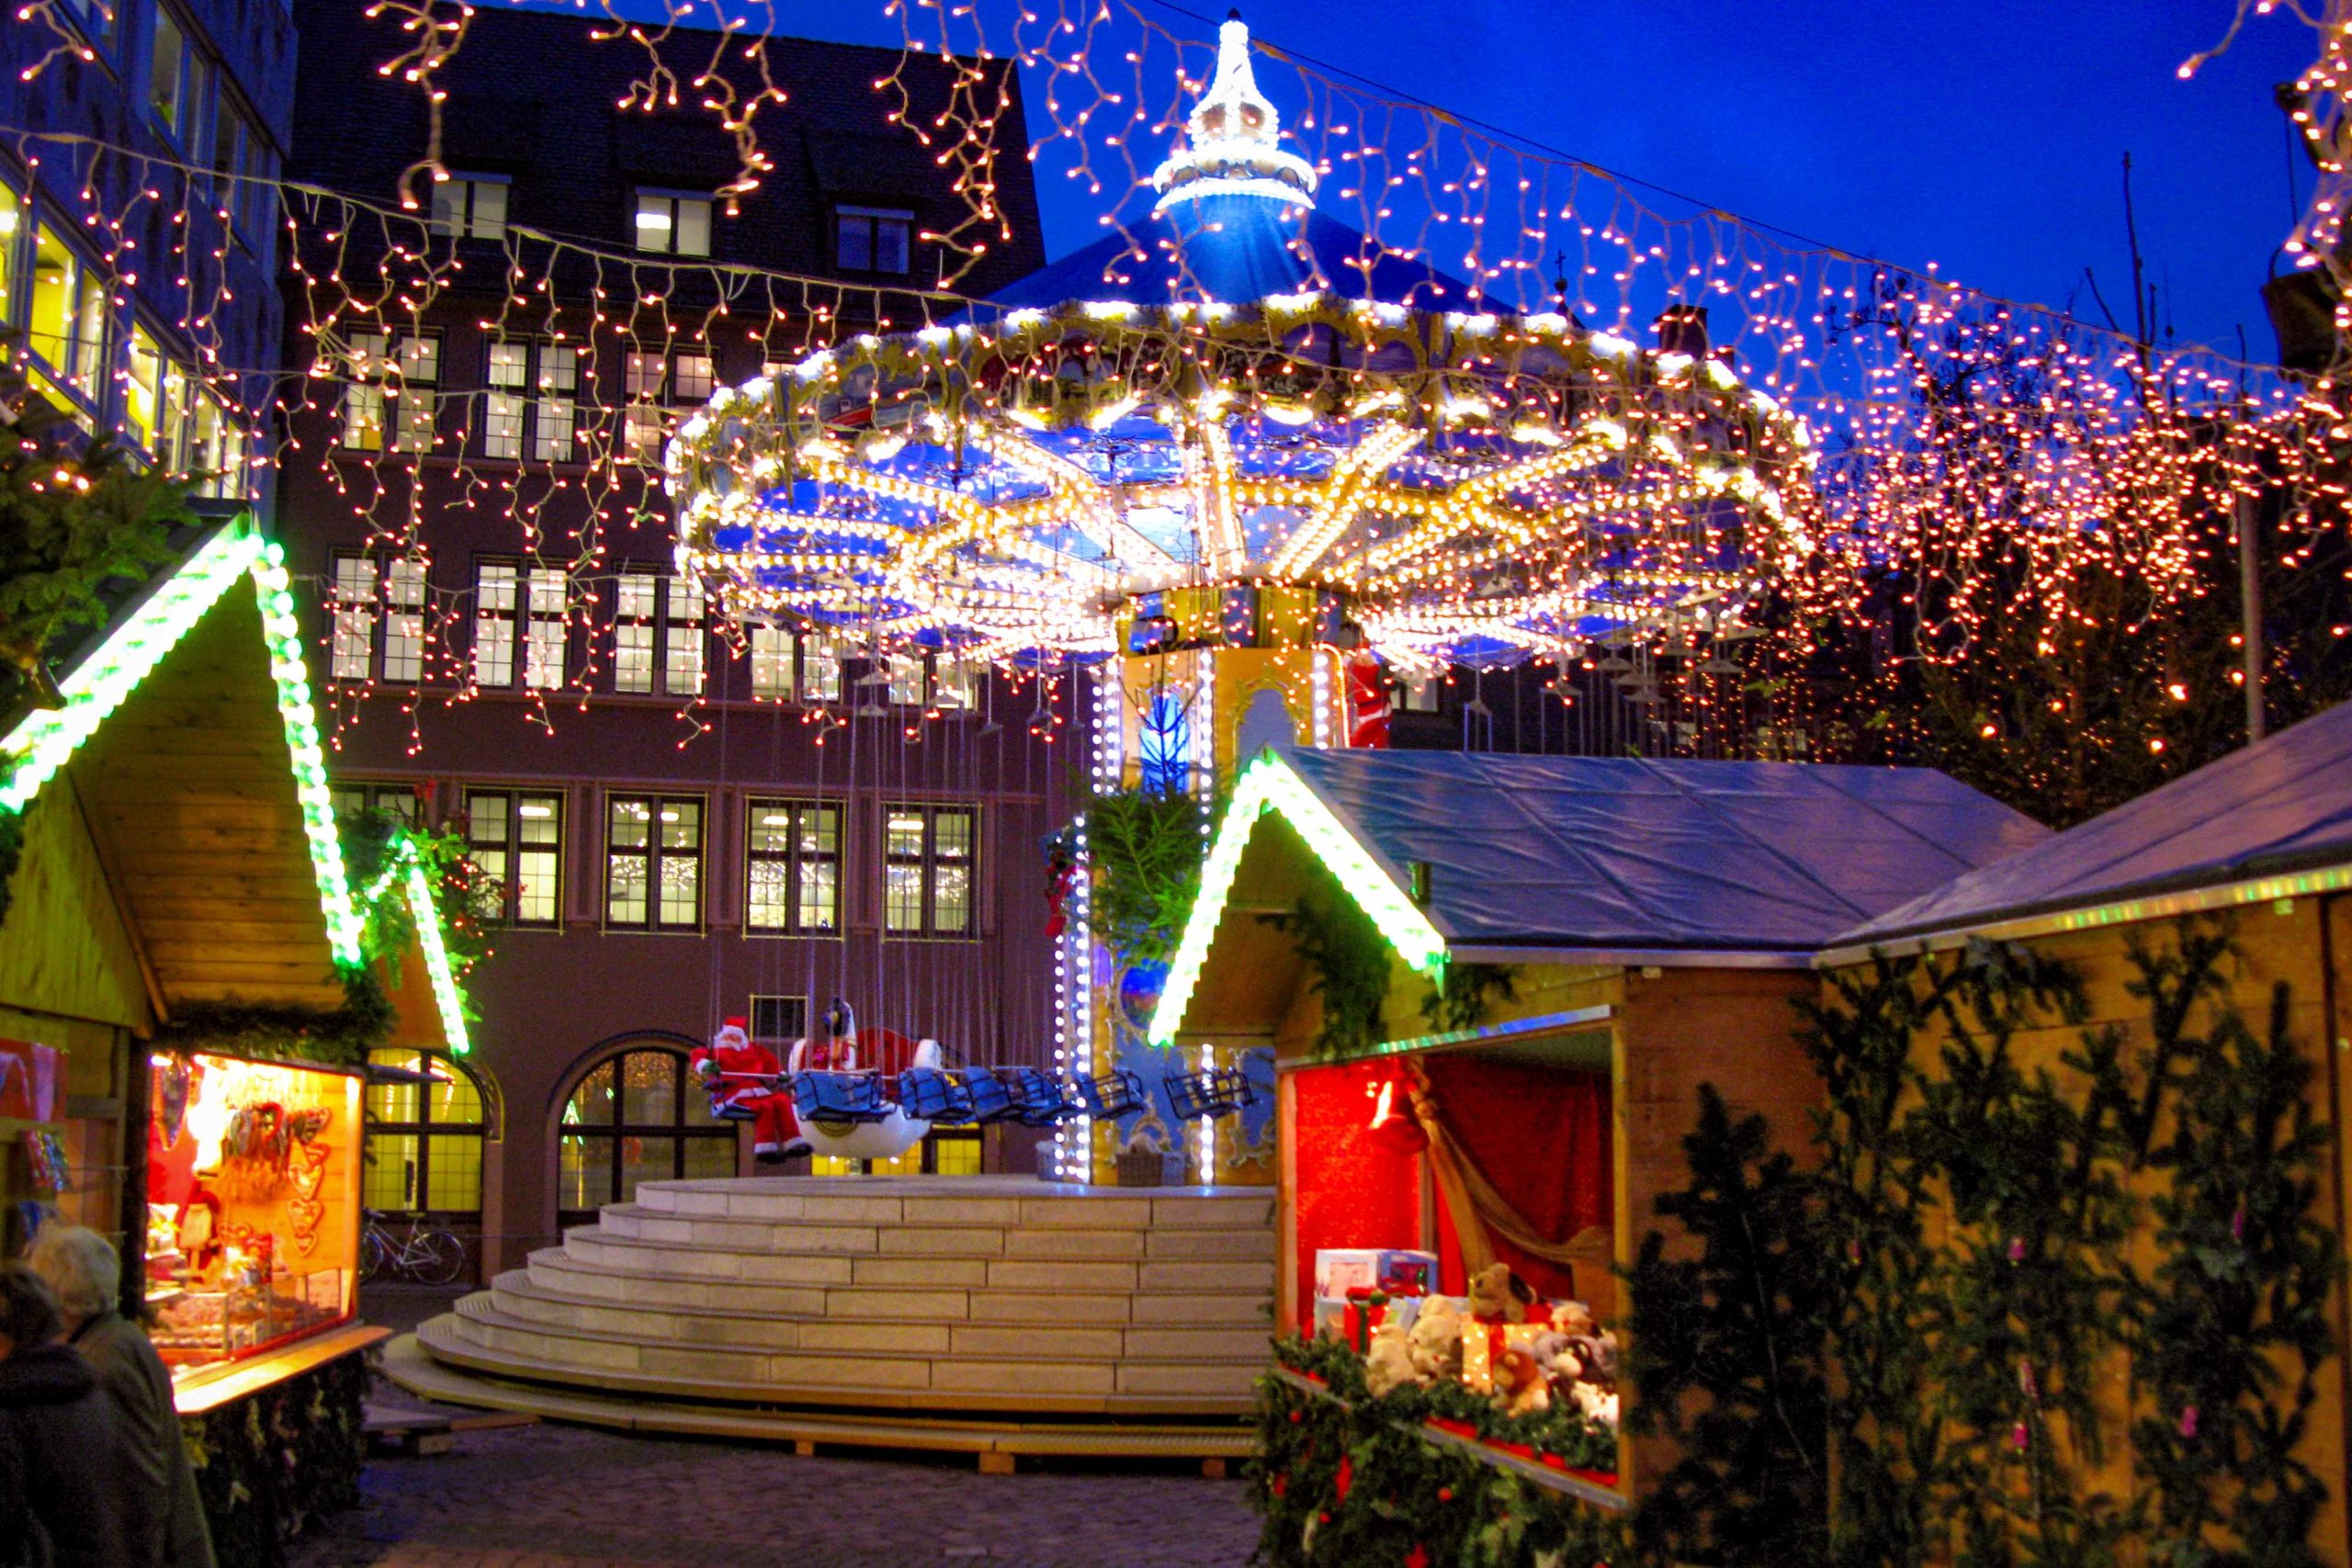 Freiburg Christmas market at Kartoffelmarkt © Andreas Schwarzkopf - license (CC BY-SA 3.0) from Wikimedia Commons